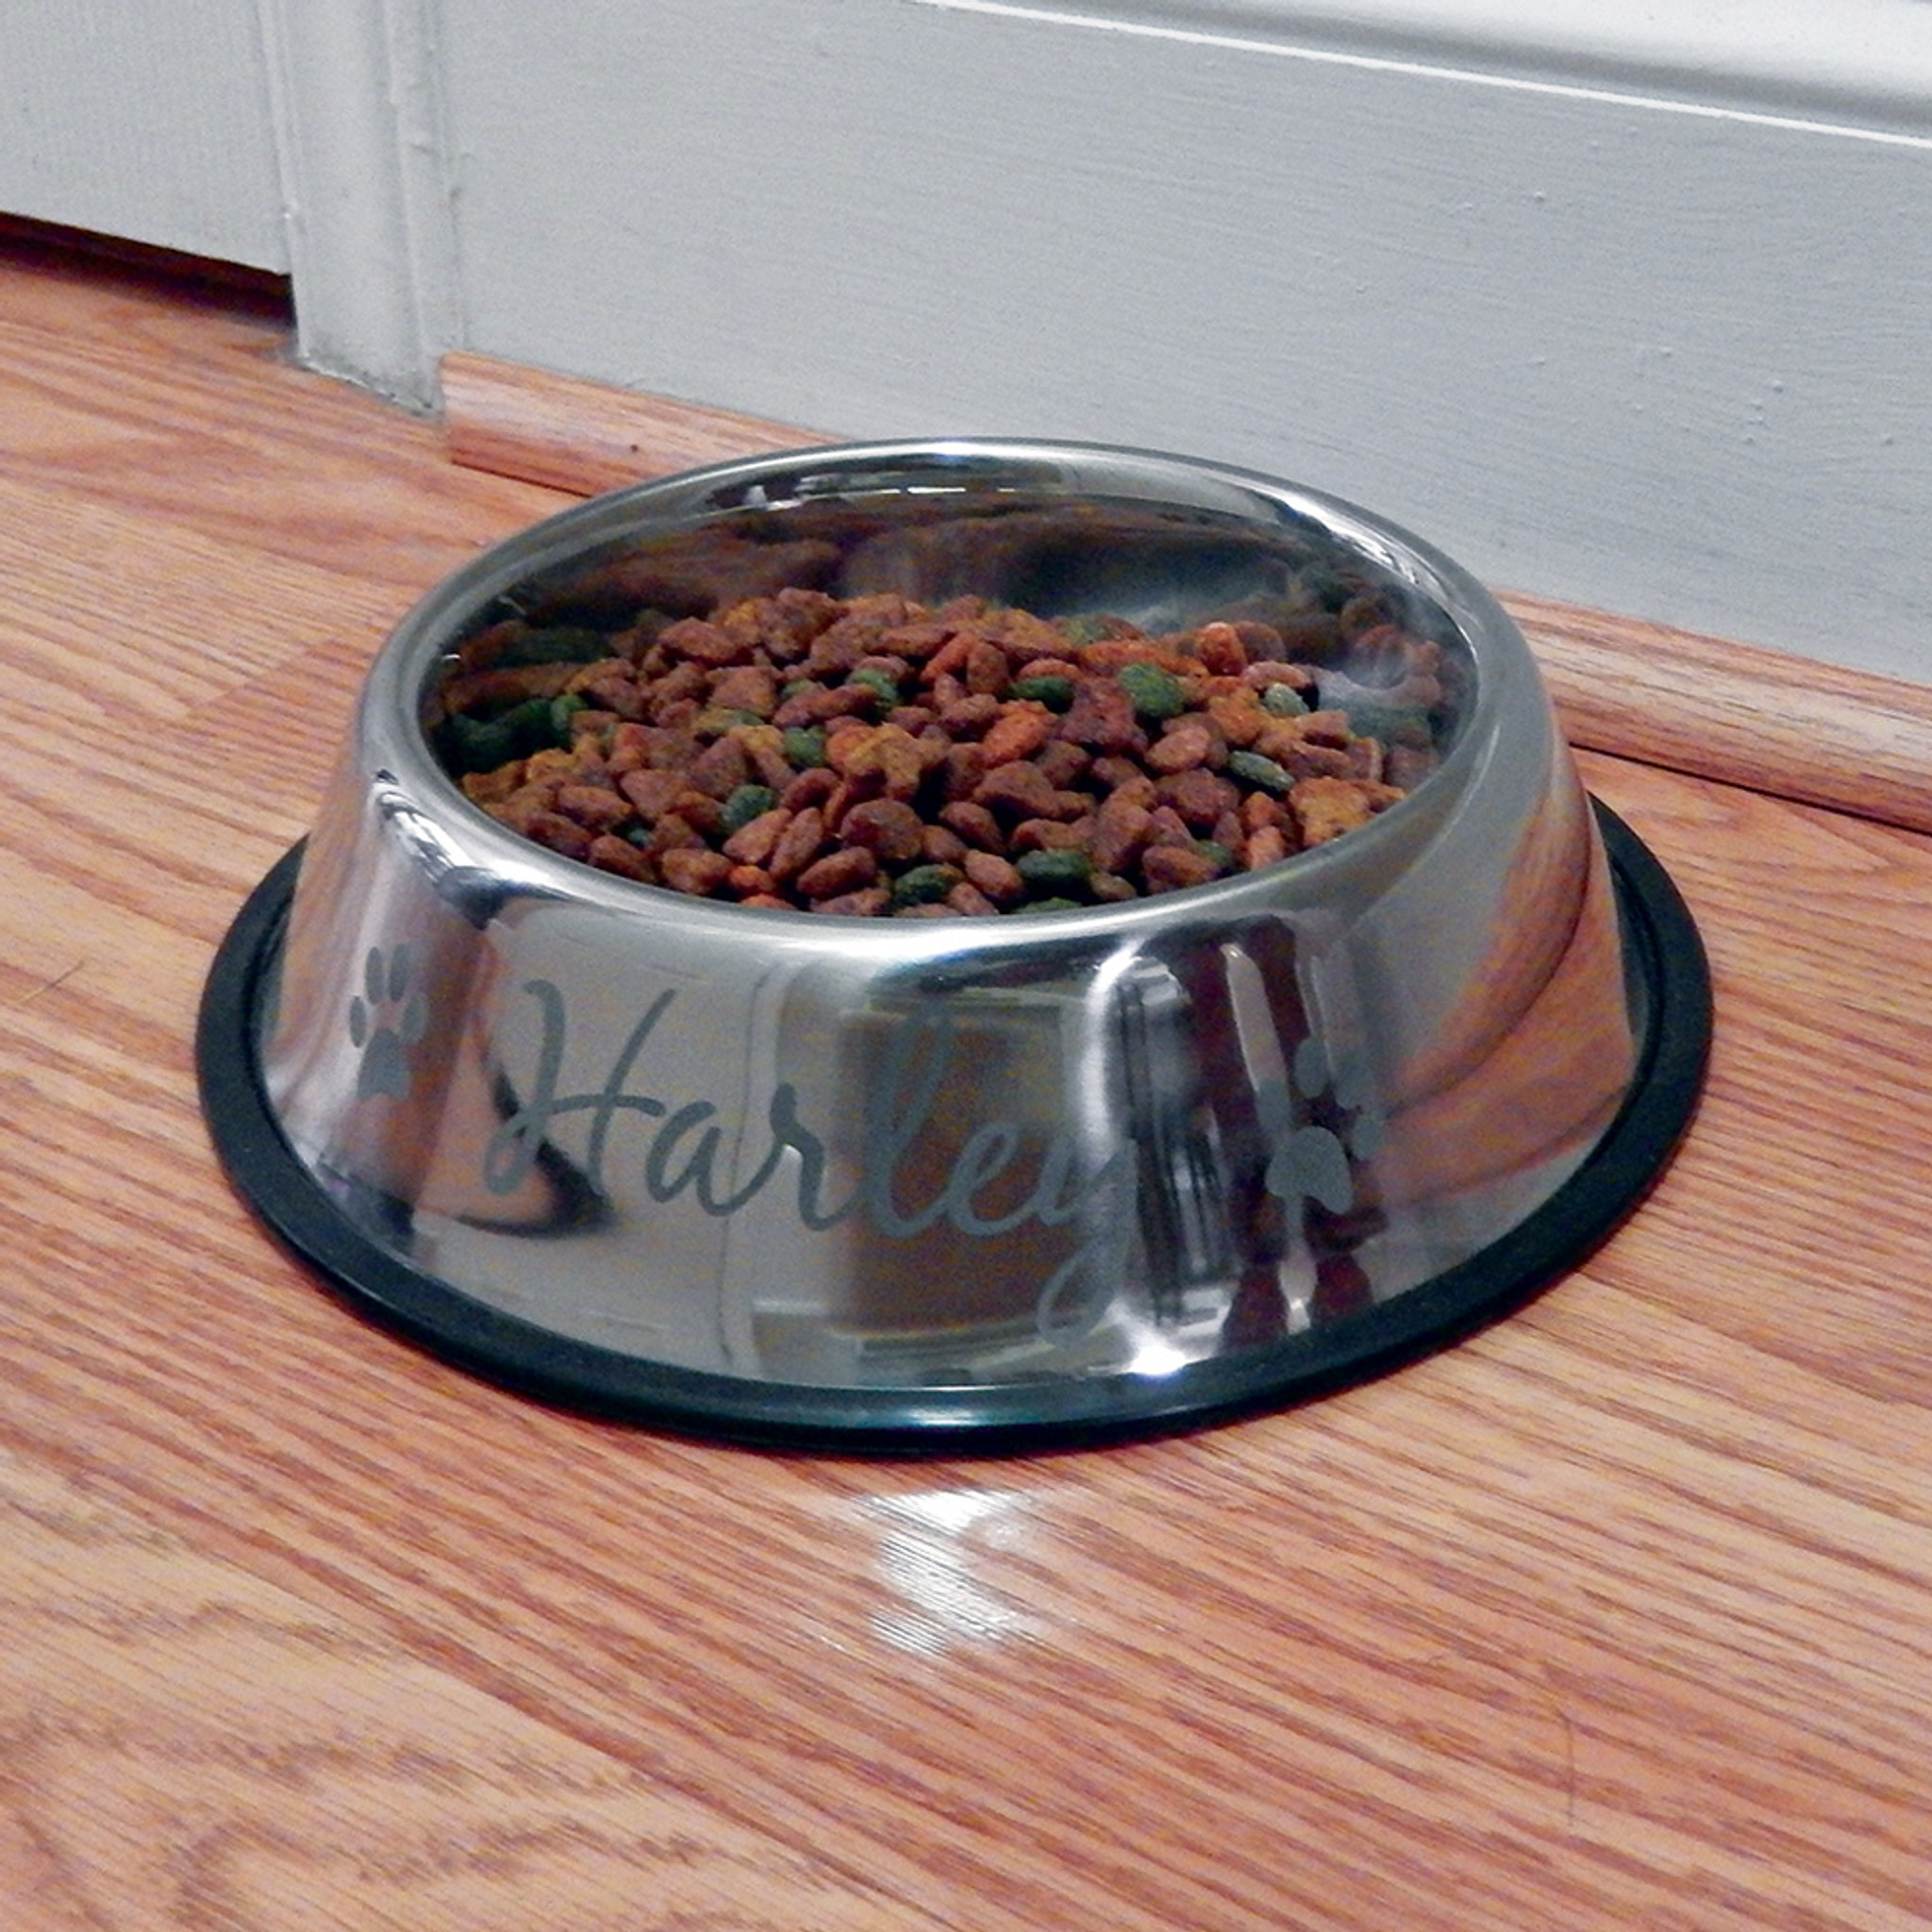 Dog/cat Food & Water Bowl Label Set FREE SHIPPING in US. Custom